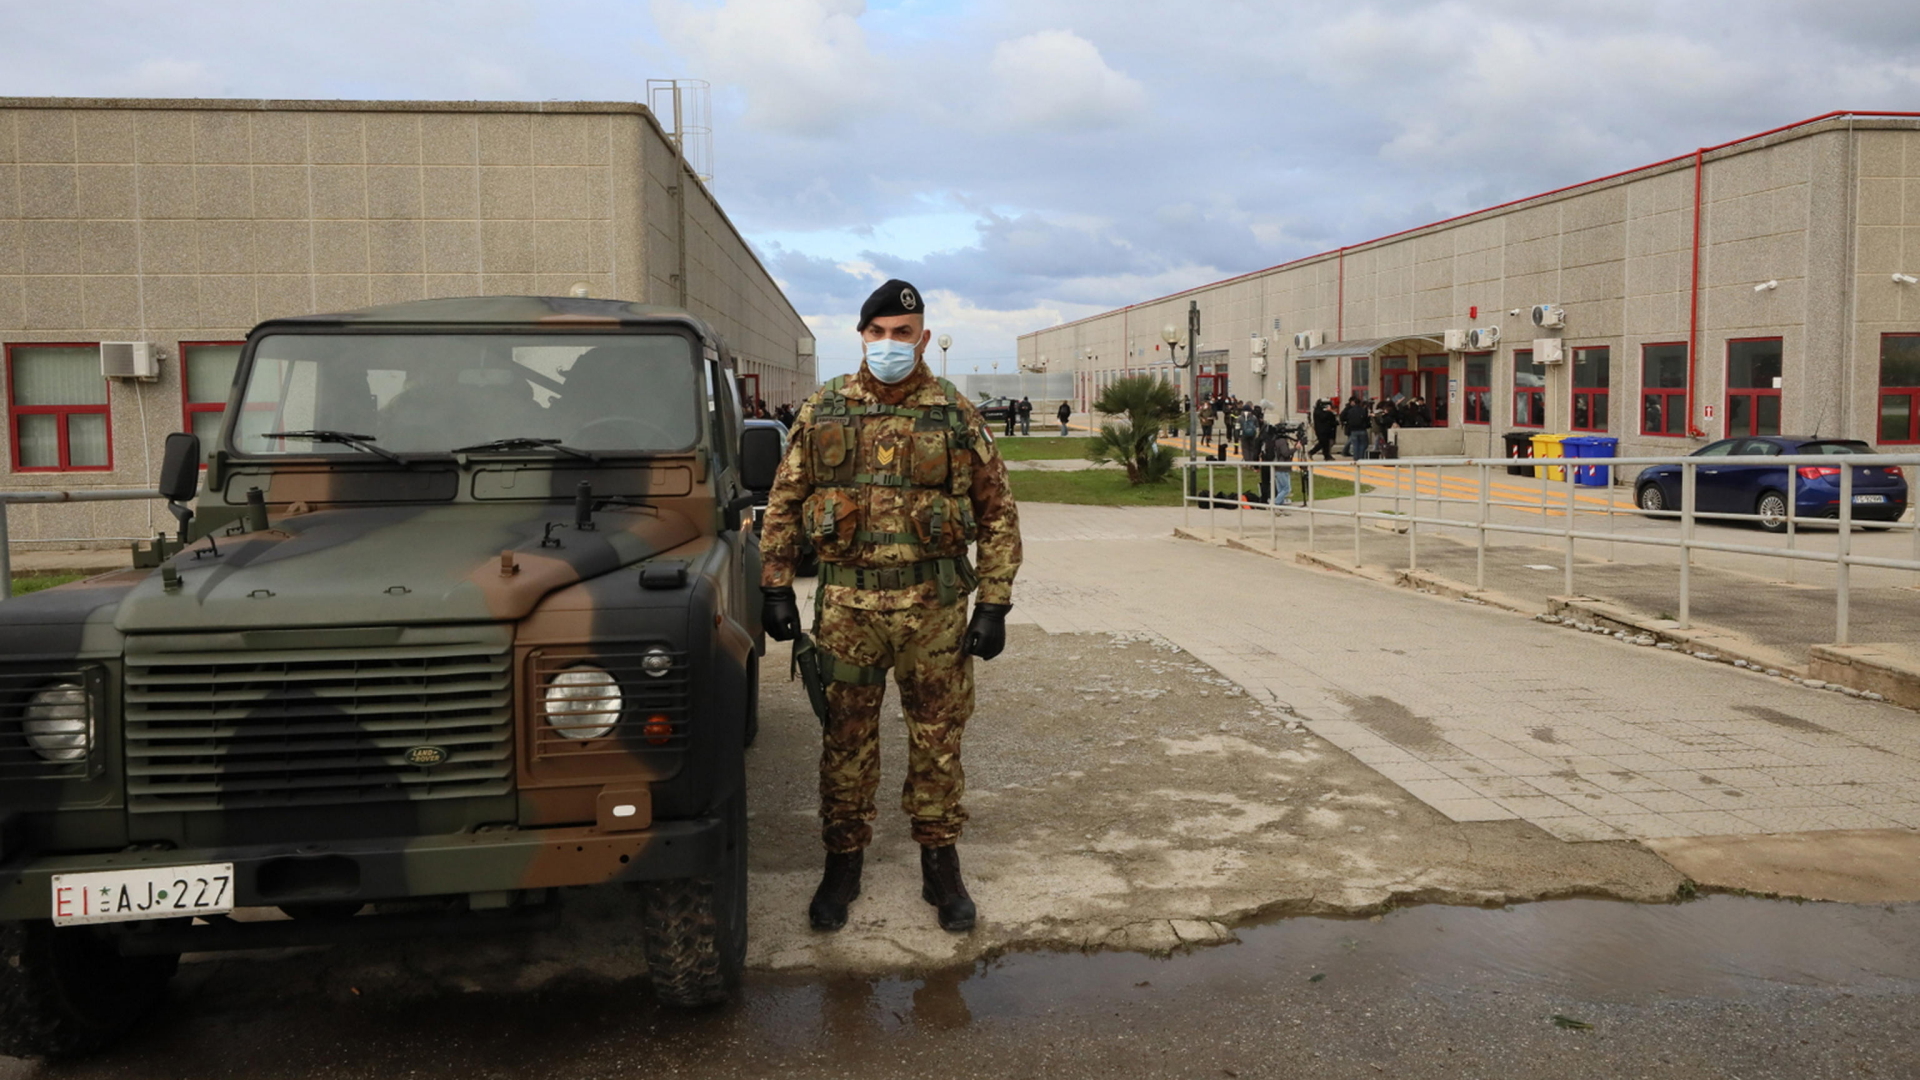 Bewaffnete Soldaten stehen vor dem Gerichtsgebäude in Italien | SALVATORE MONTEVERDE/EPA-EFE/Shu